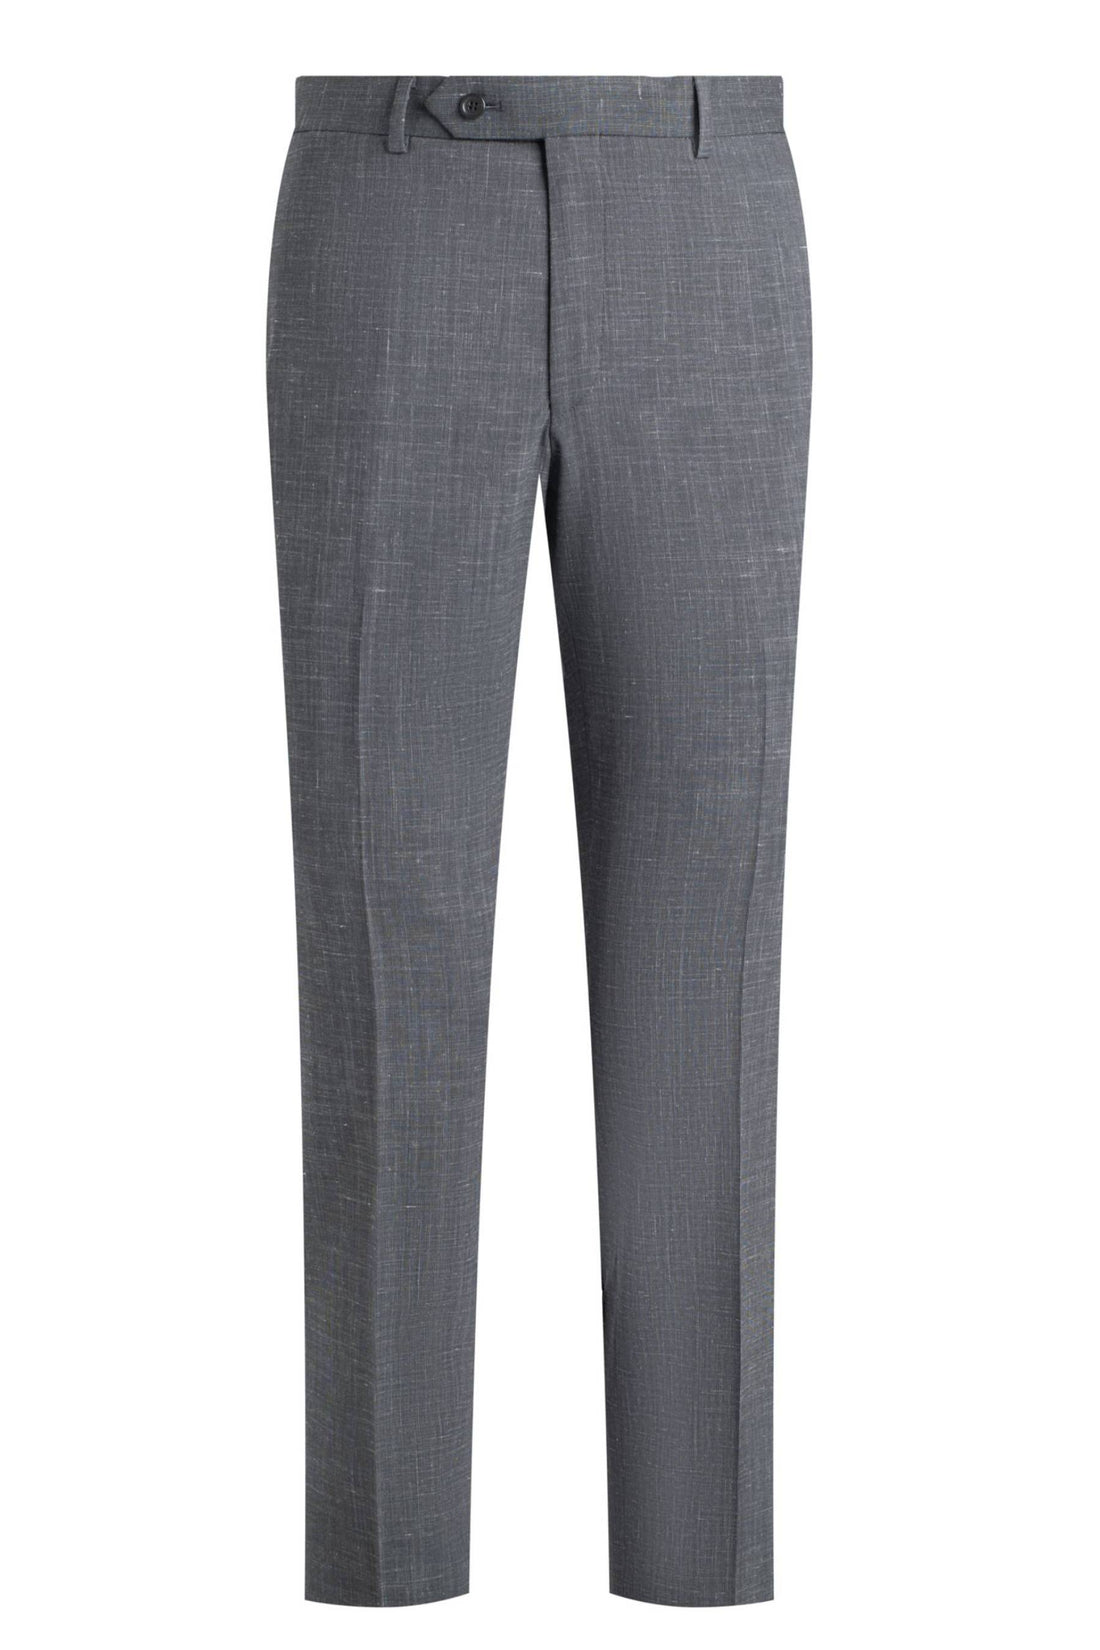 Samuelsohn Grey Wool Linen Stretch Suit Front Pant